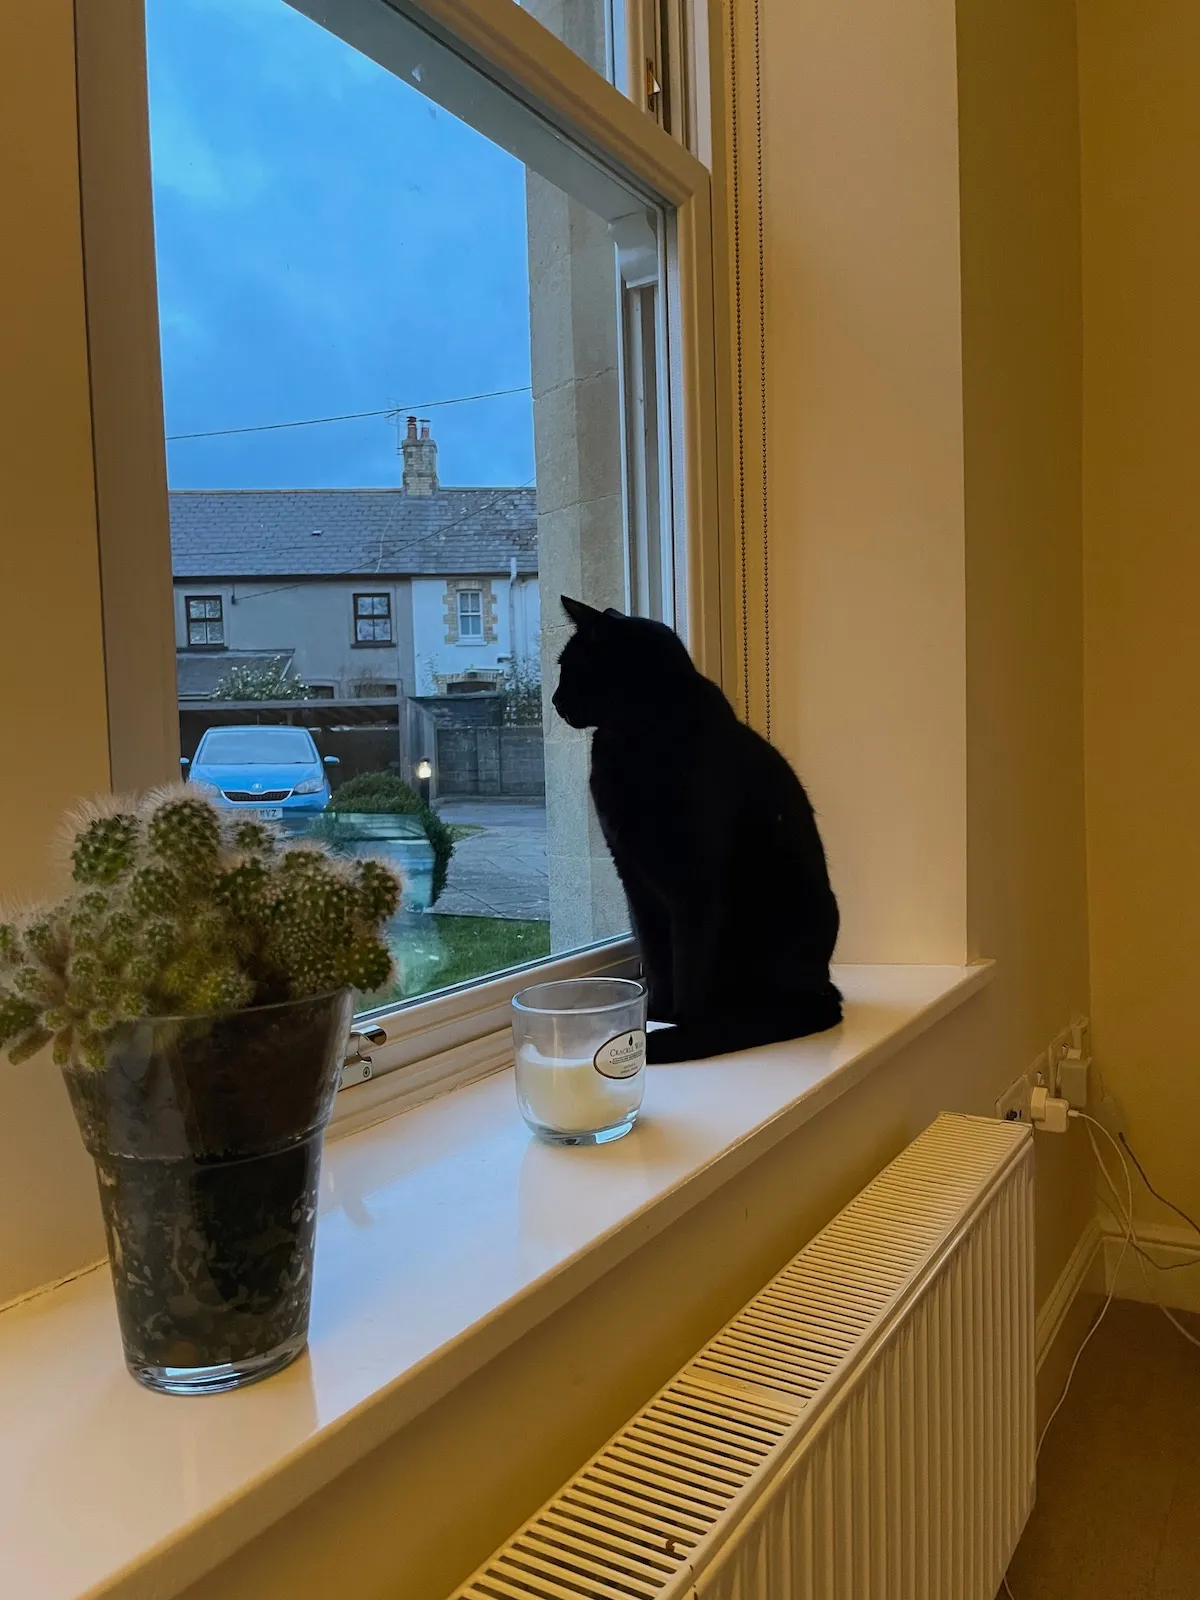 Claude the cat, sat on a windowsill looking majestic